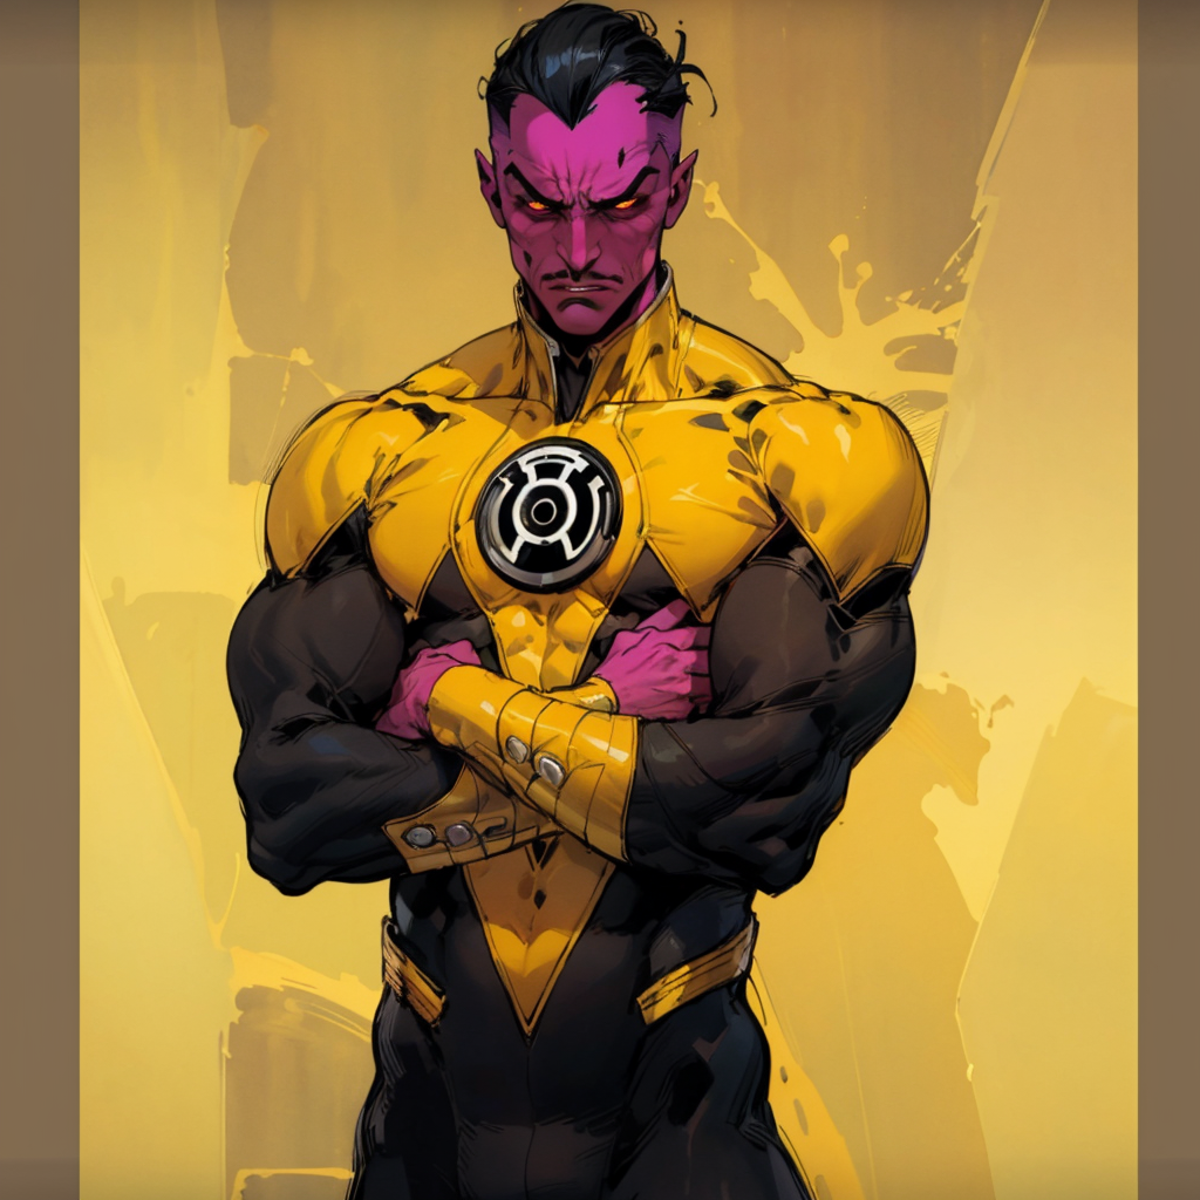 Sinestro/yellow lantern image by meruyn07130